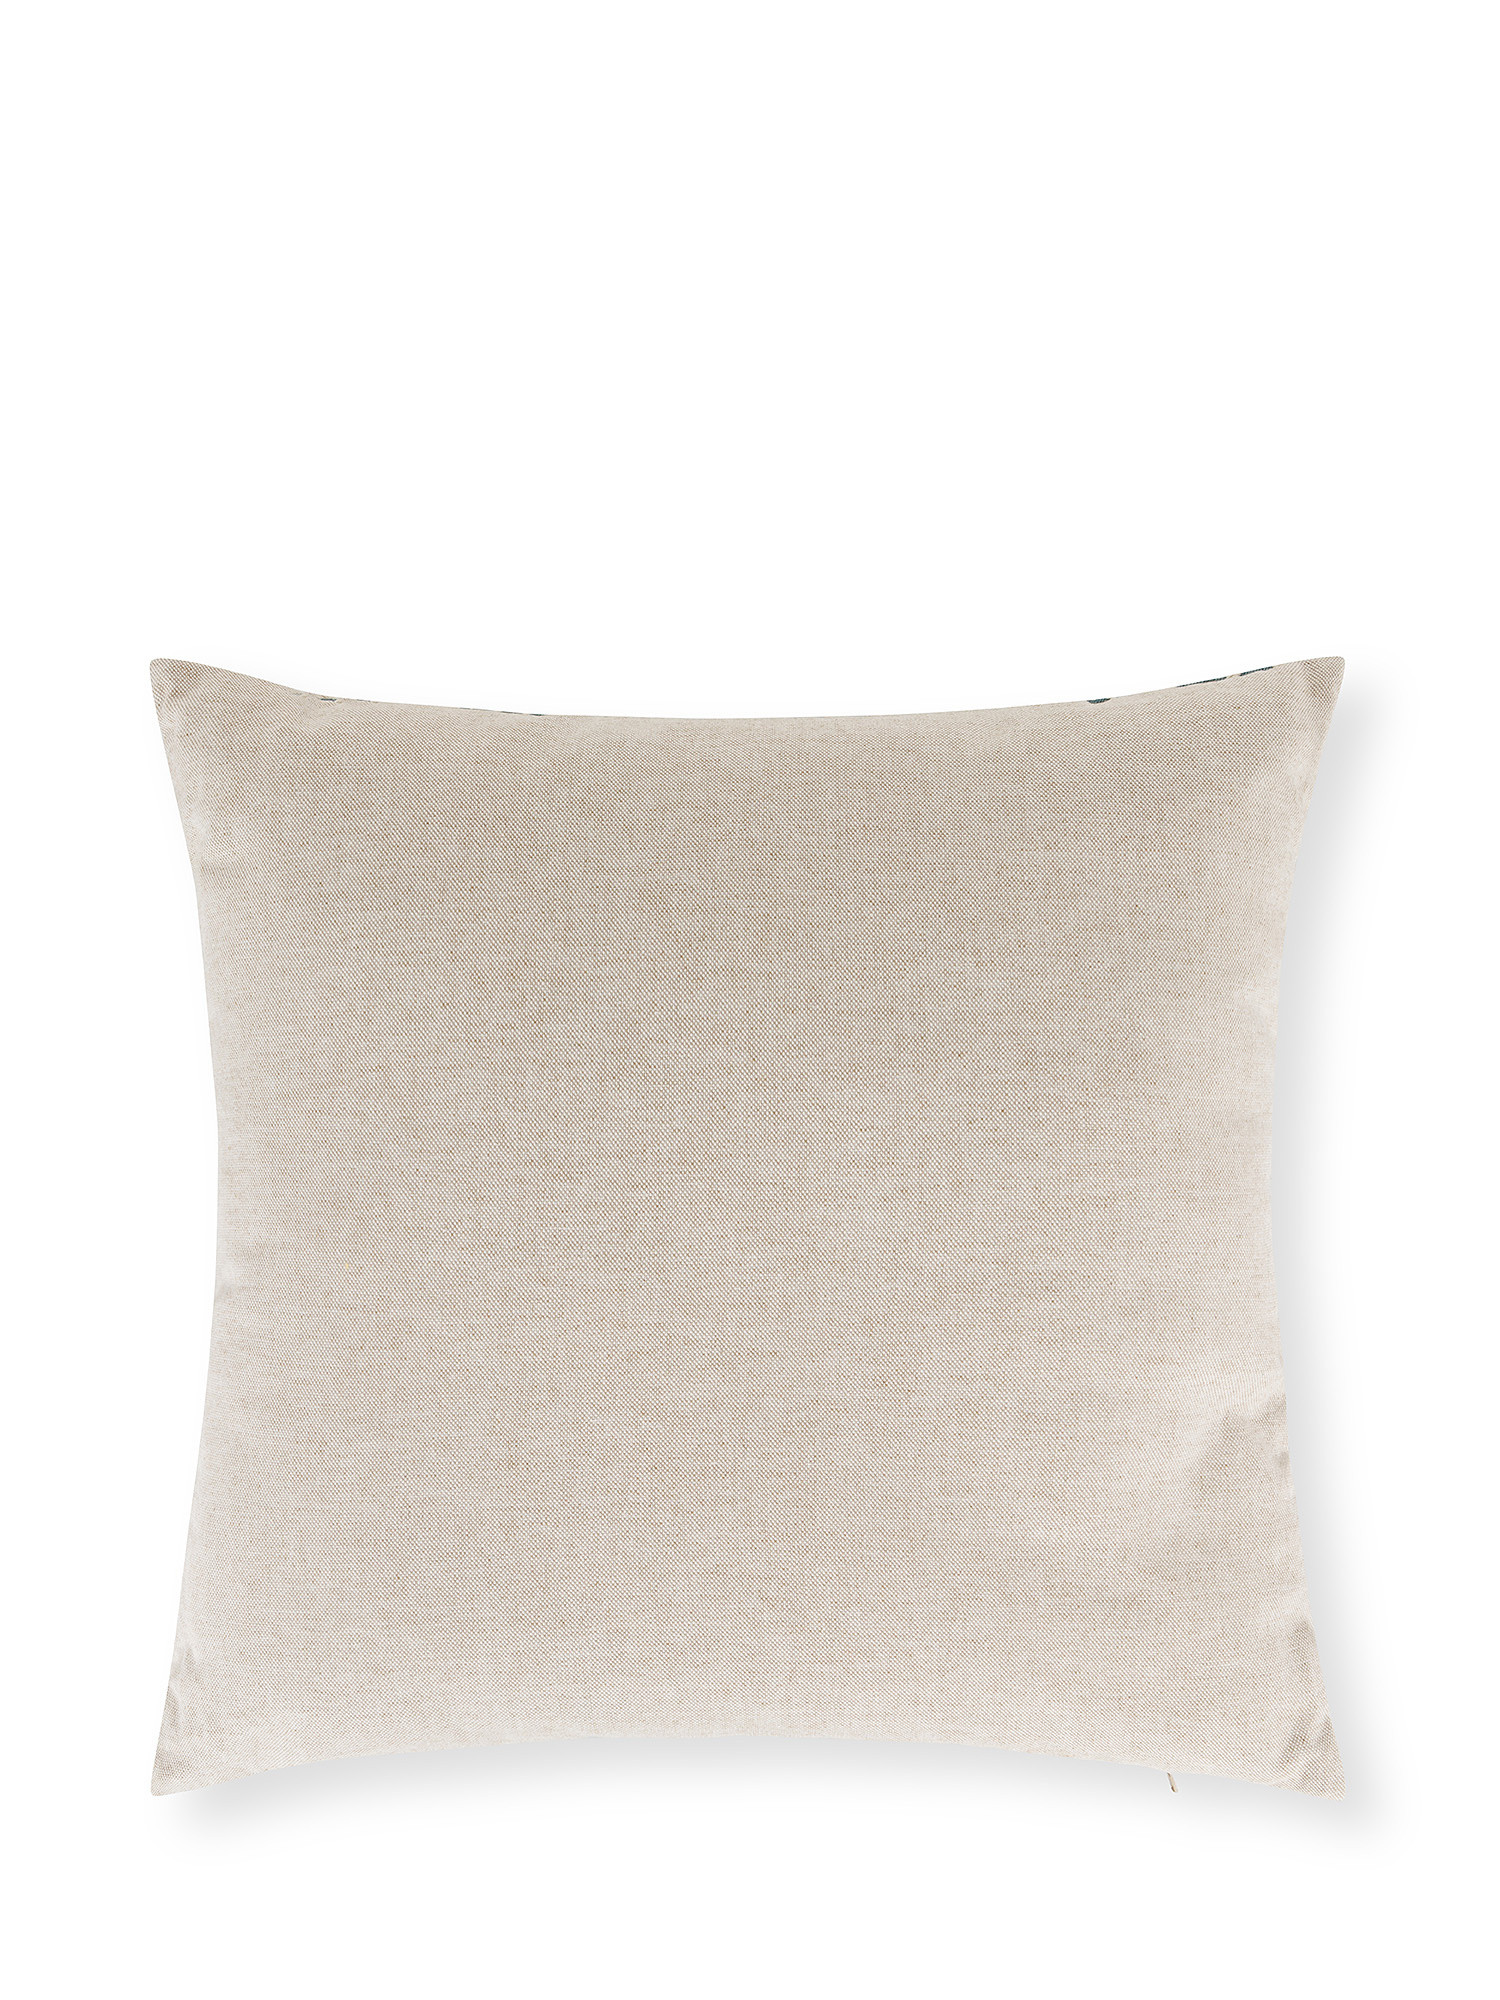 Jacquard cushion with geometric pattern 45x45cm, Grey, large image number 1